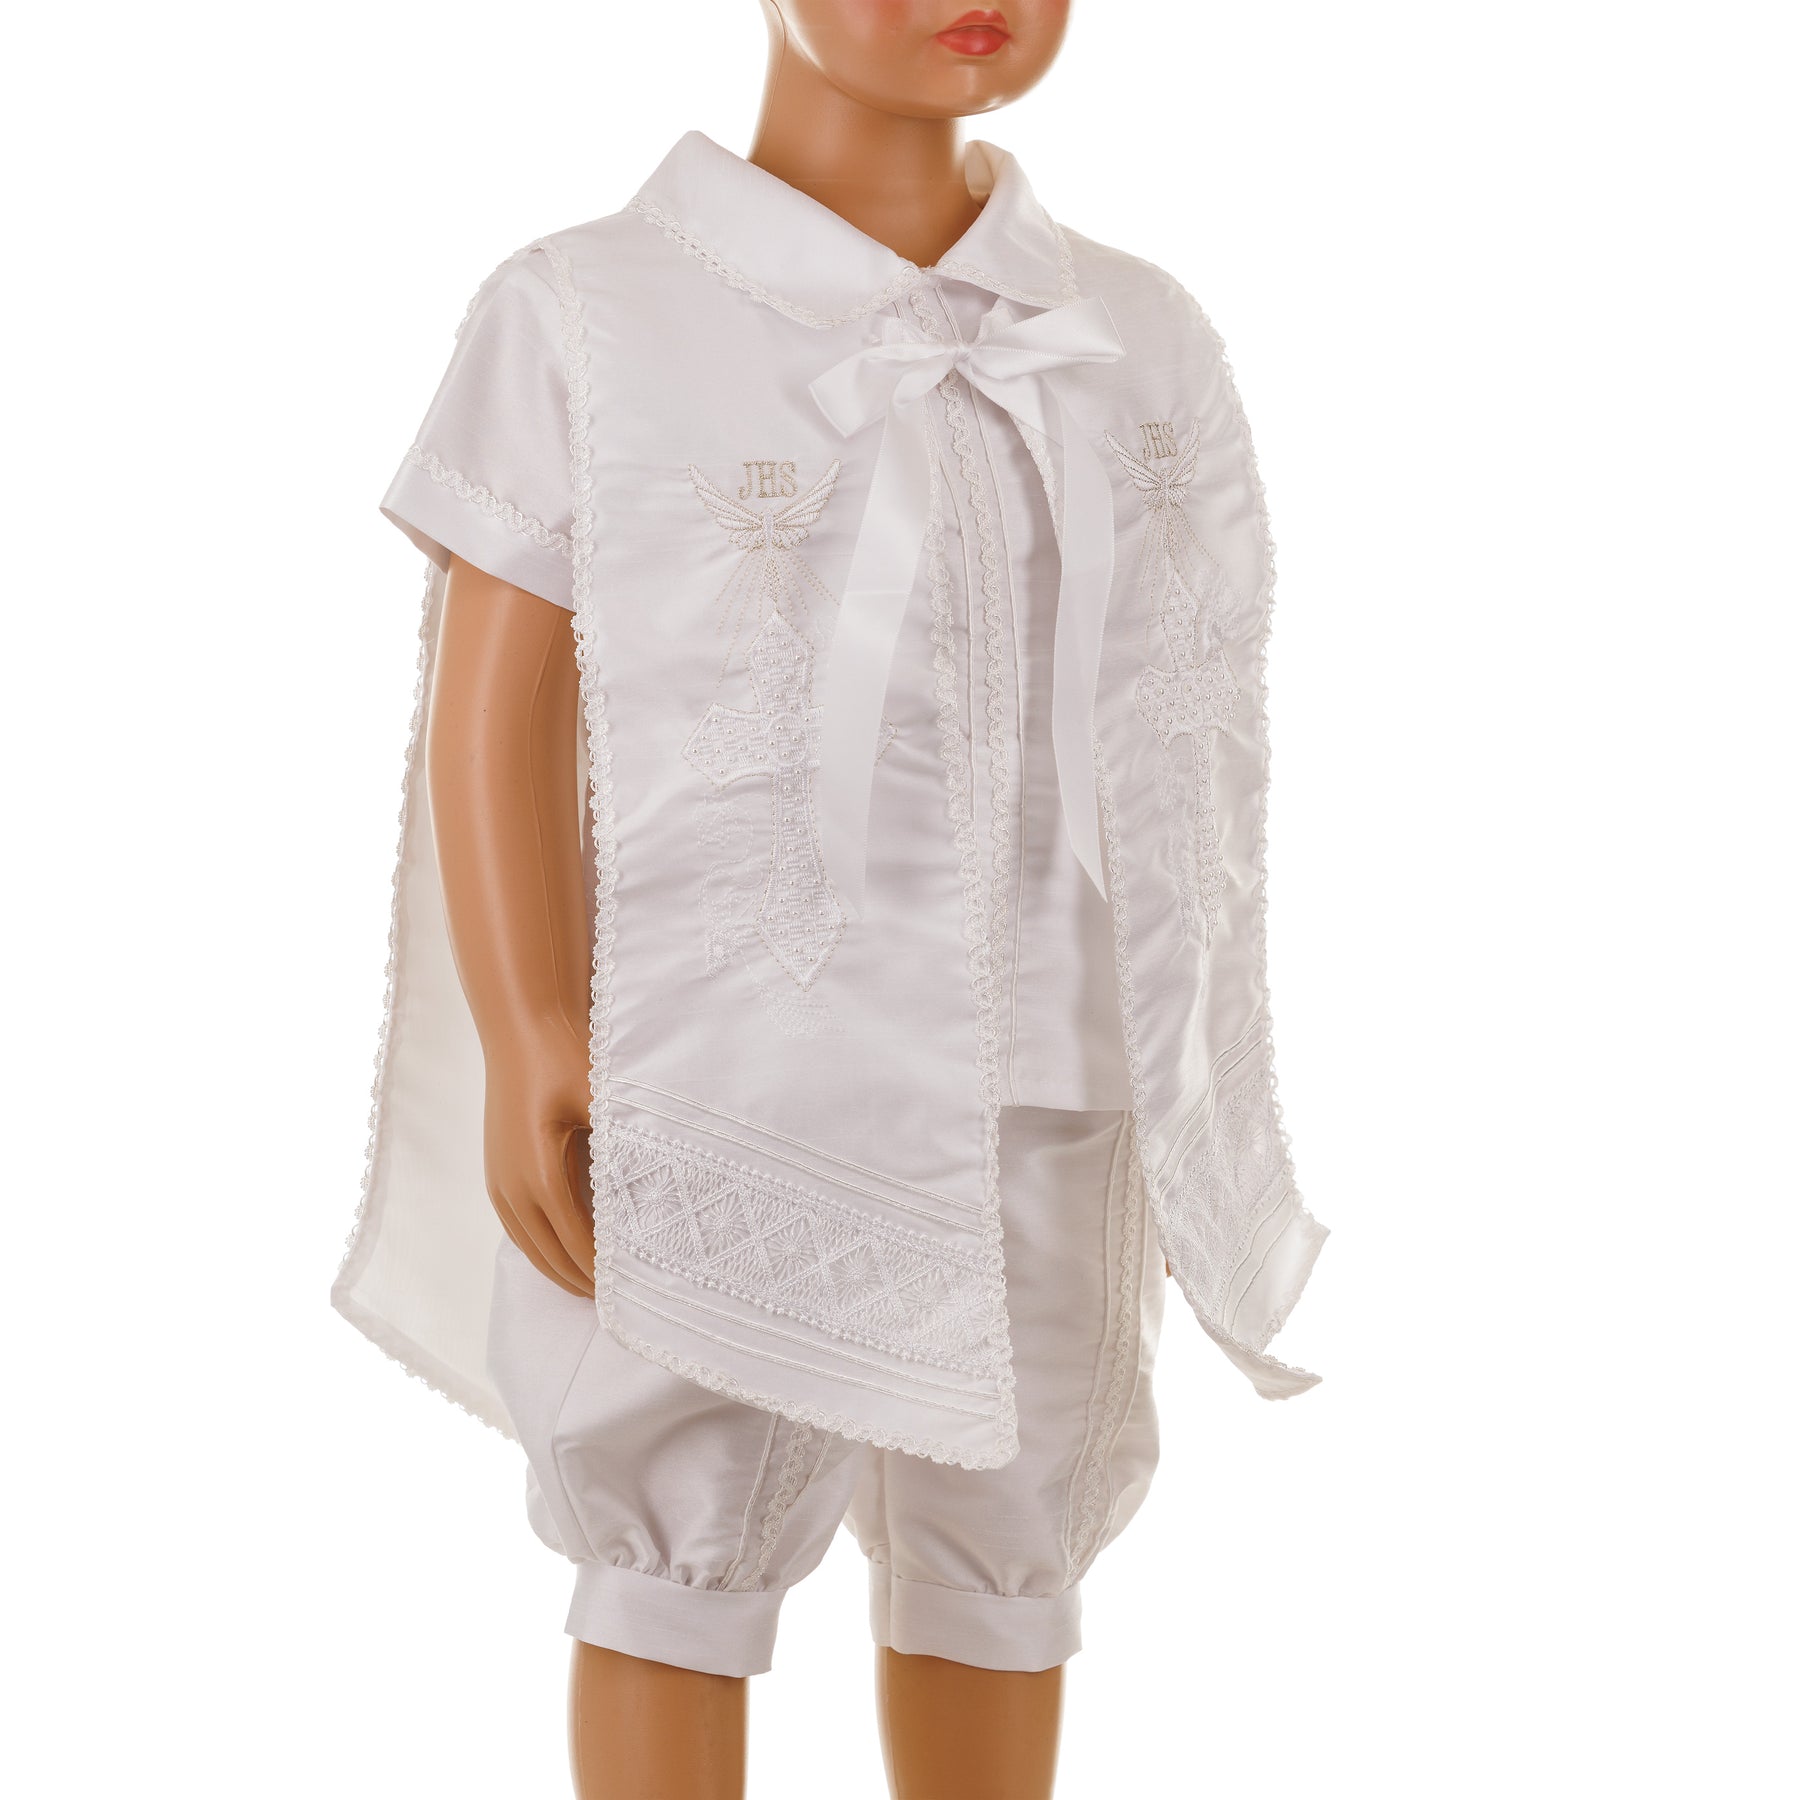 Boys Baptism Outfit, 4 Piece Christening Set, Traje de Bautizo - 905